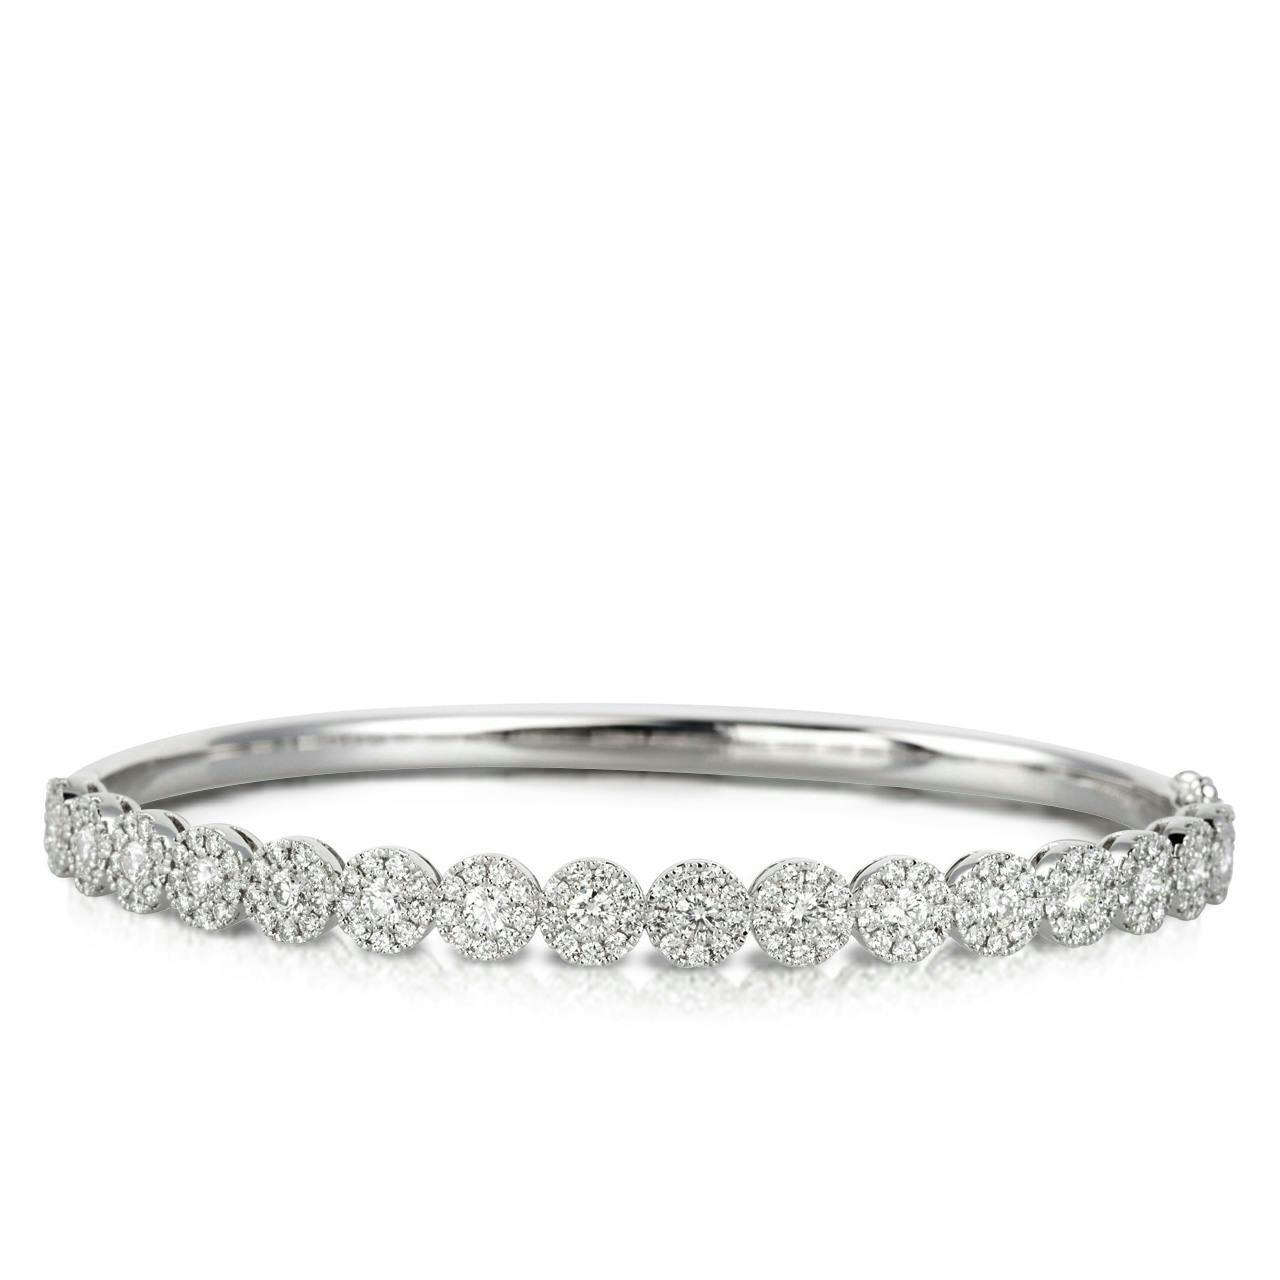 18k white gold natural diamond bangle bracelet